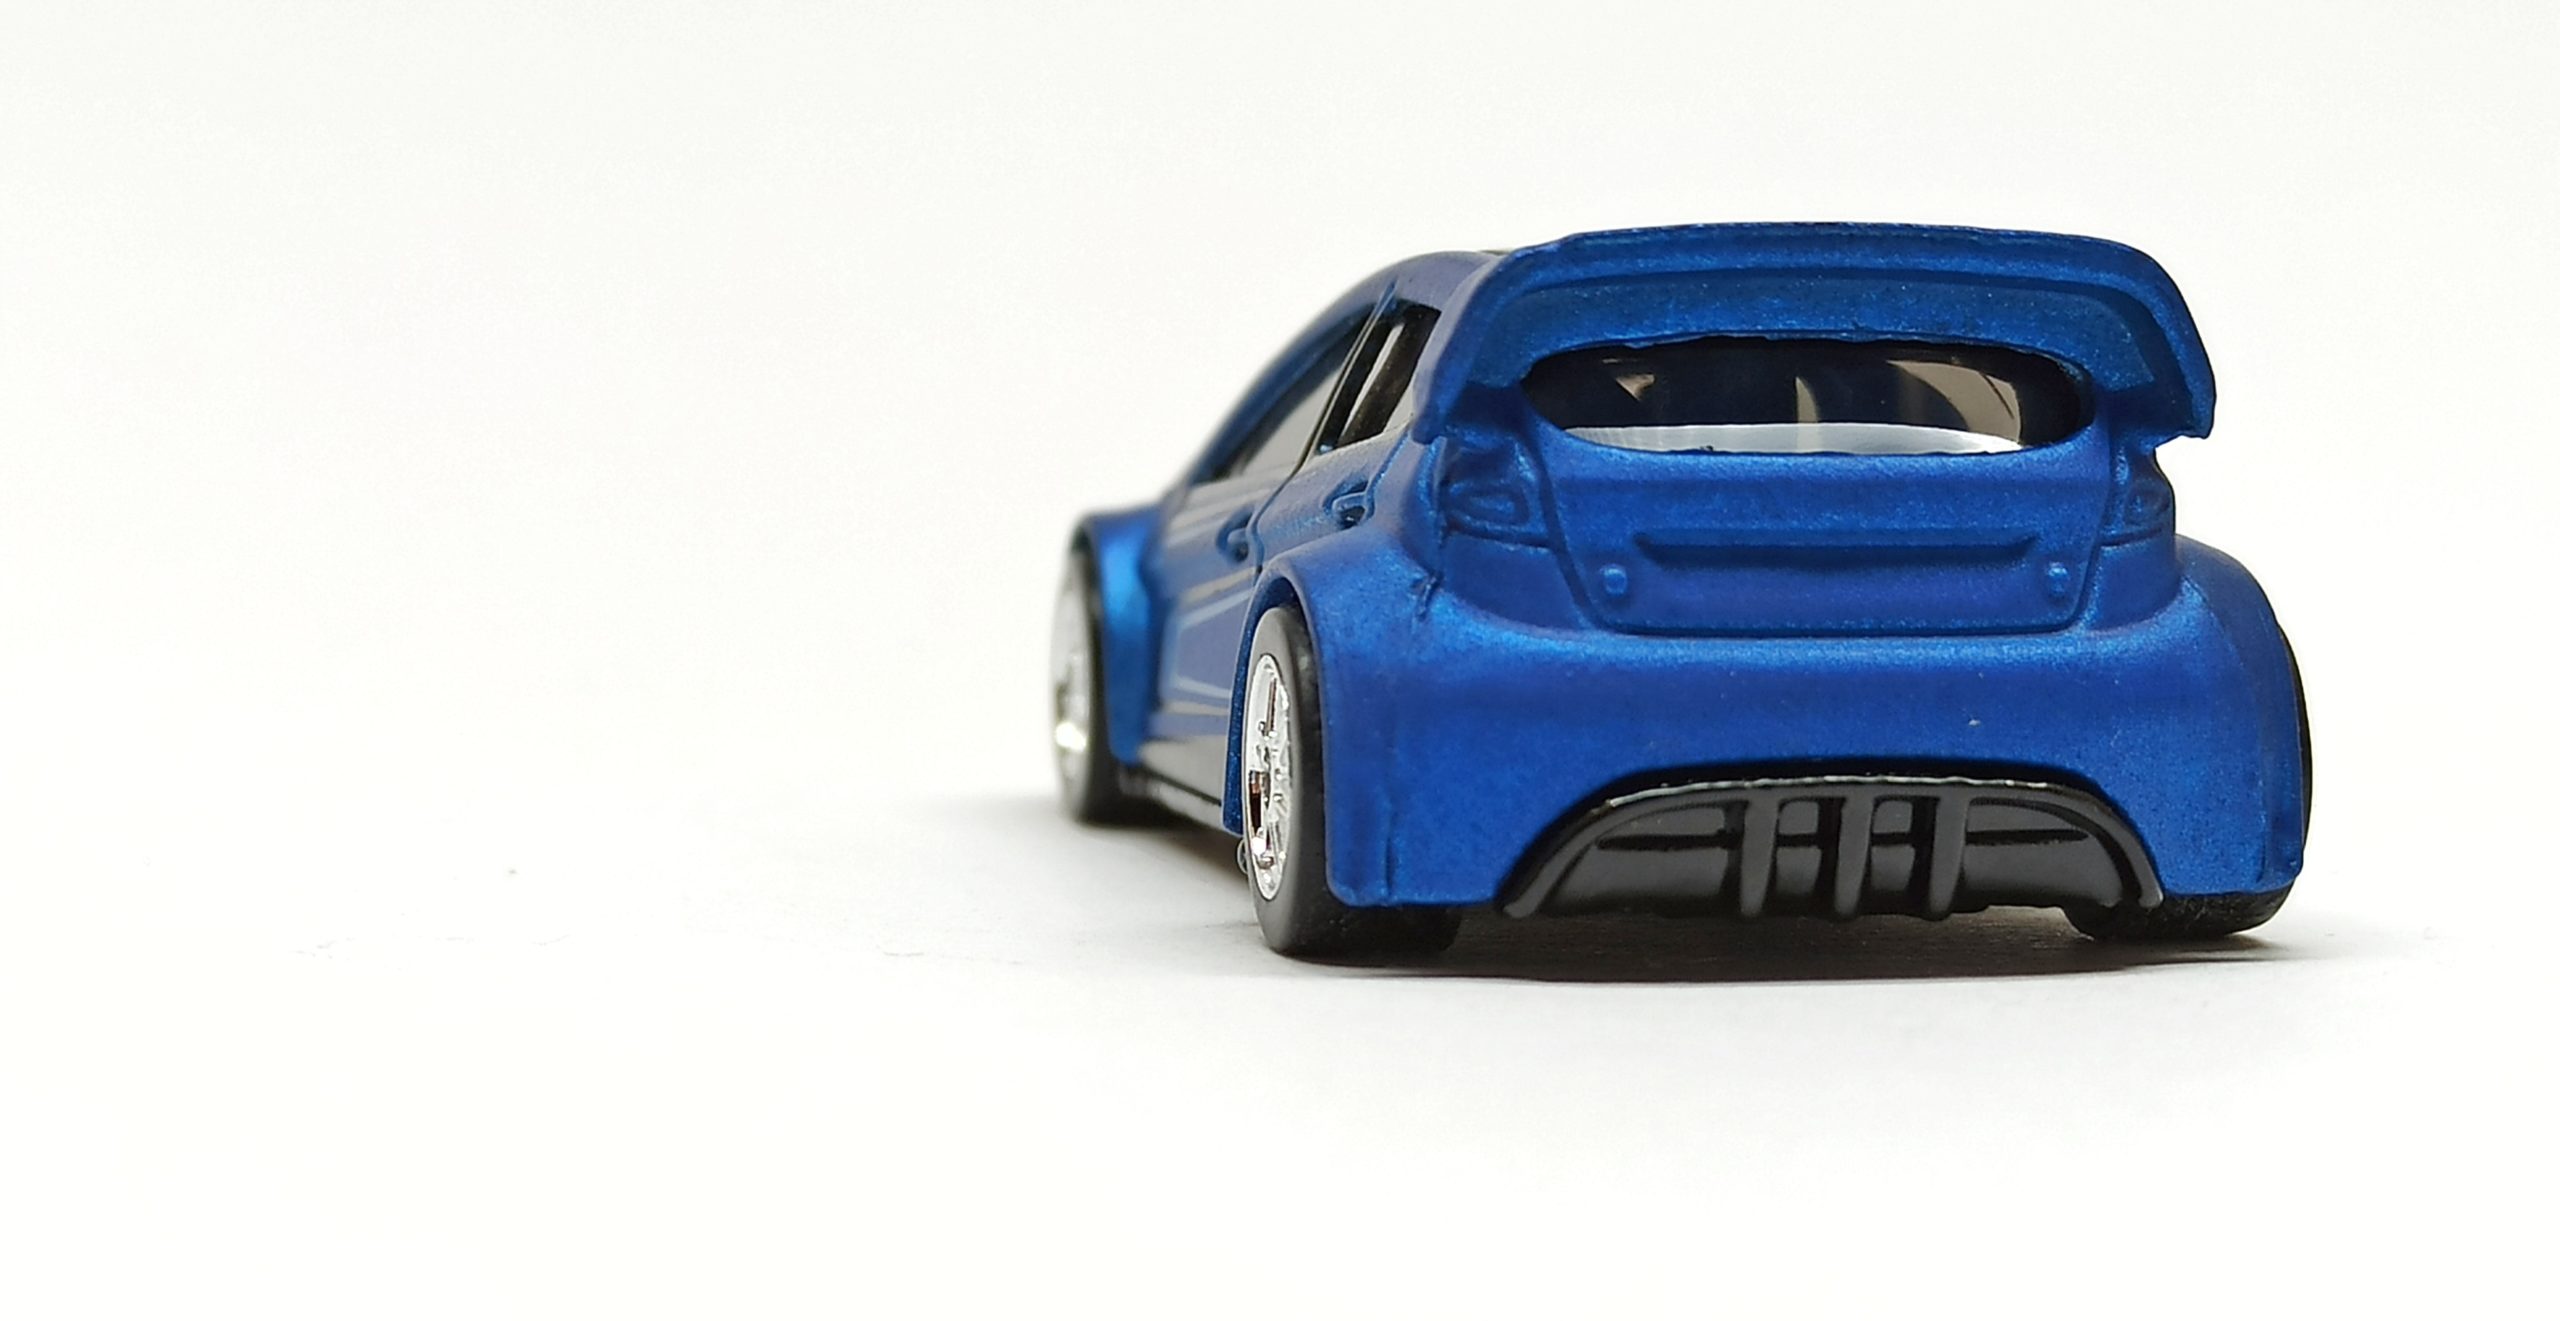 Hot Wheels '12 Ford Fiesta (X8294) 2013 Boulevard satin blue